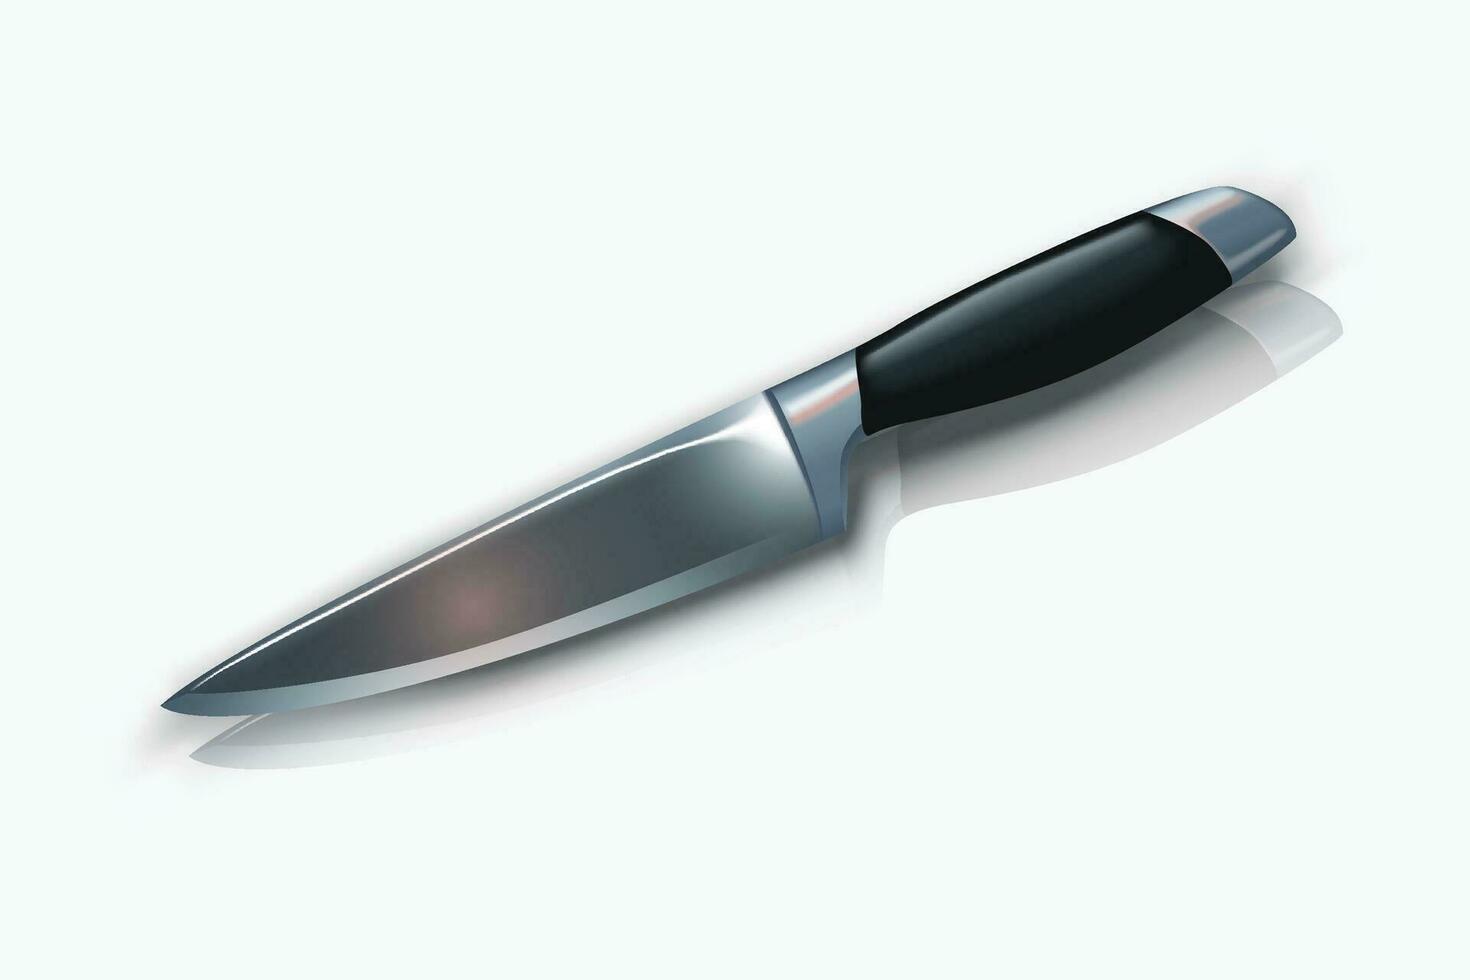 imagen de cuchillos vector